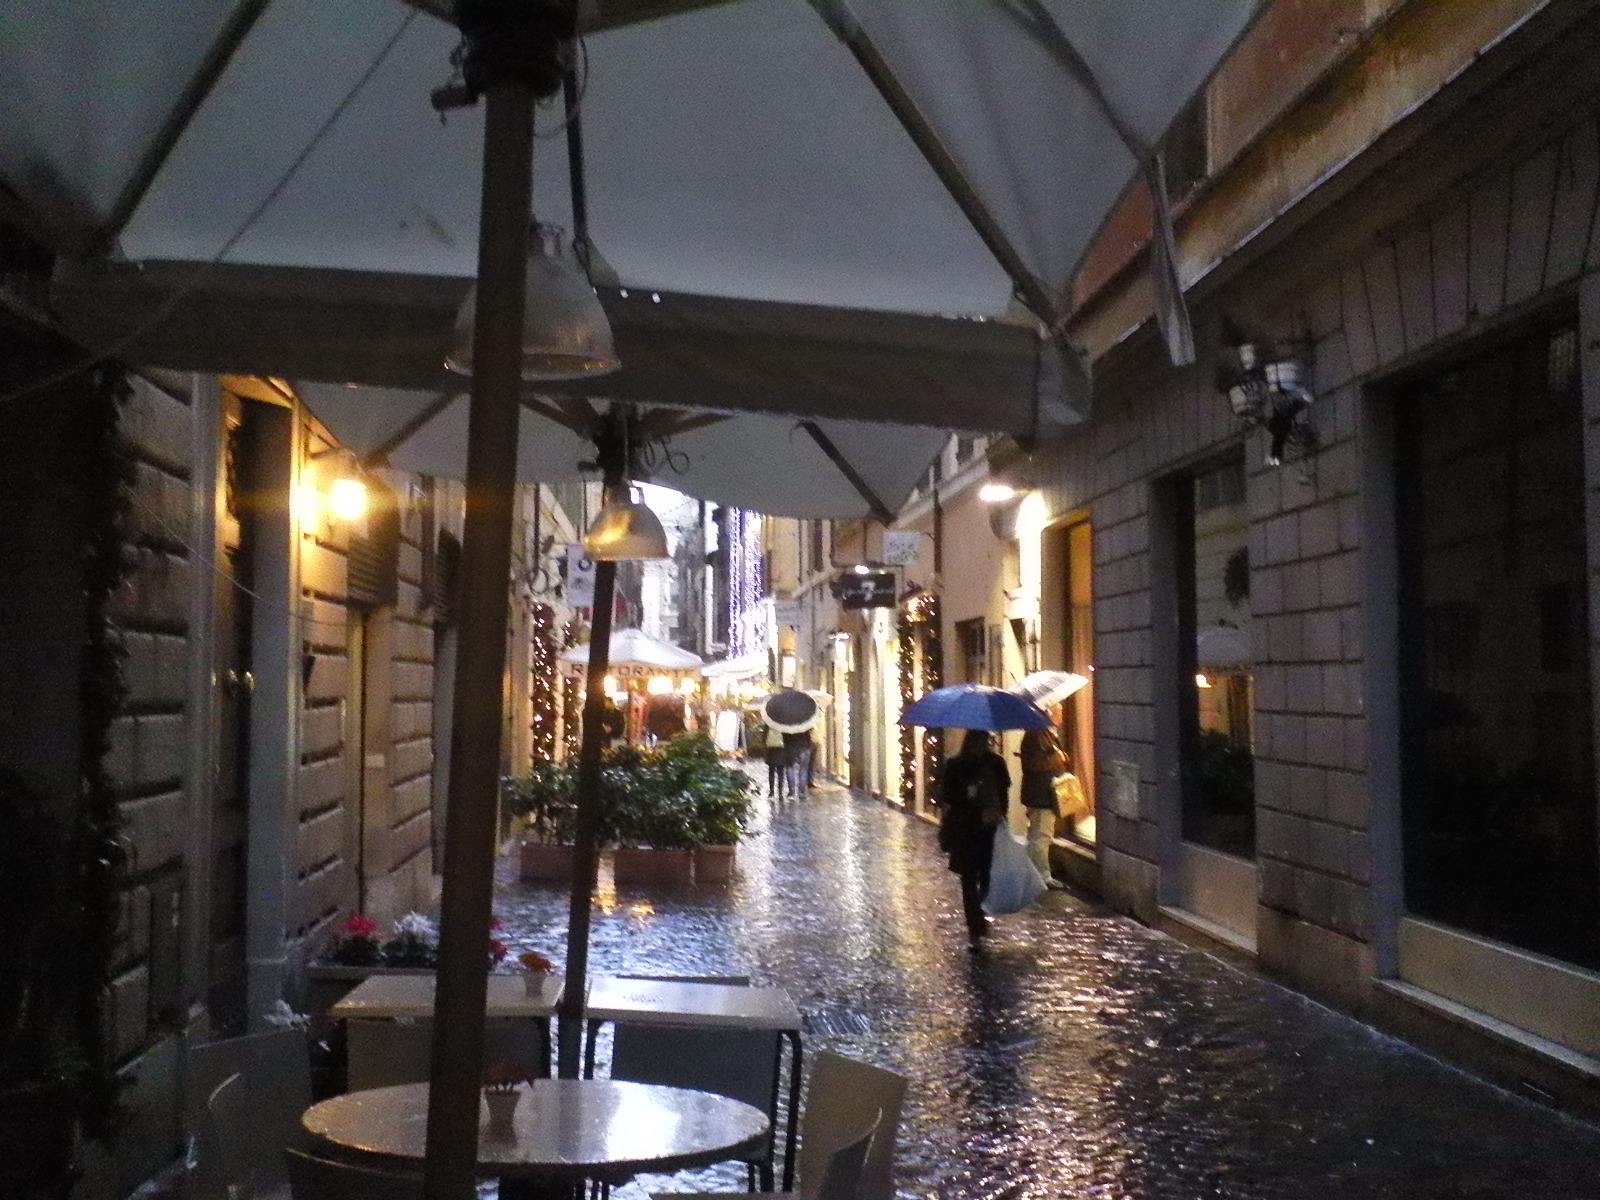 A rainy night in Rome